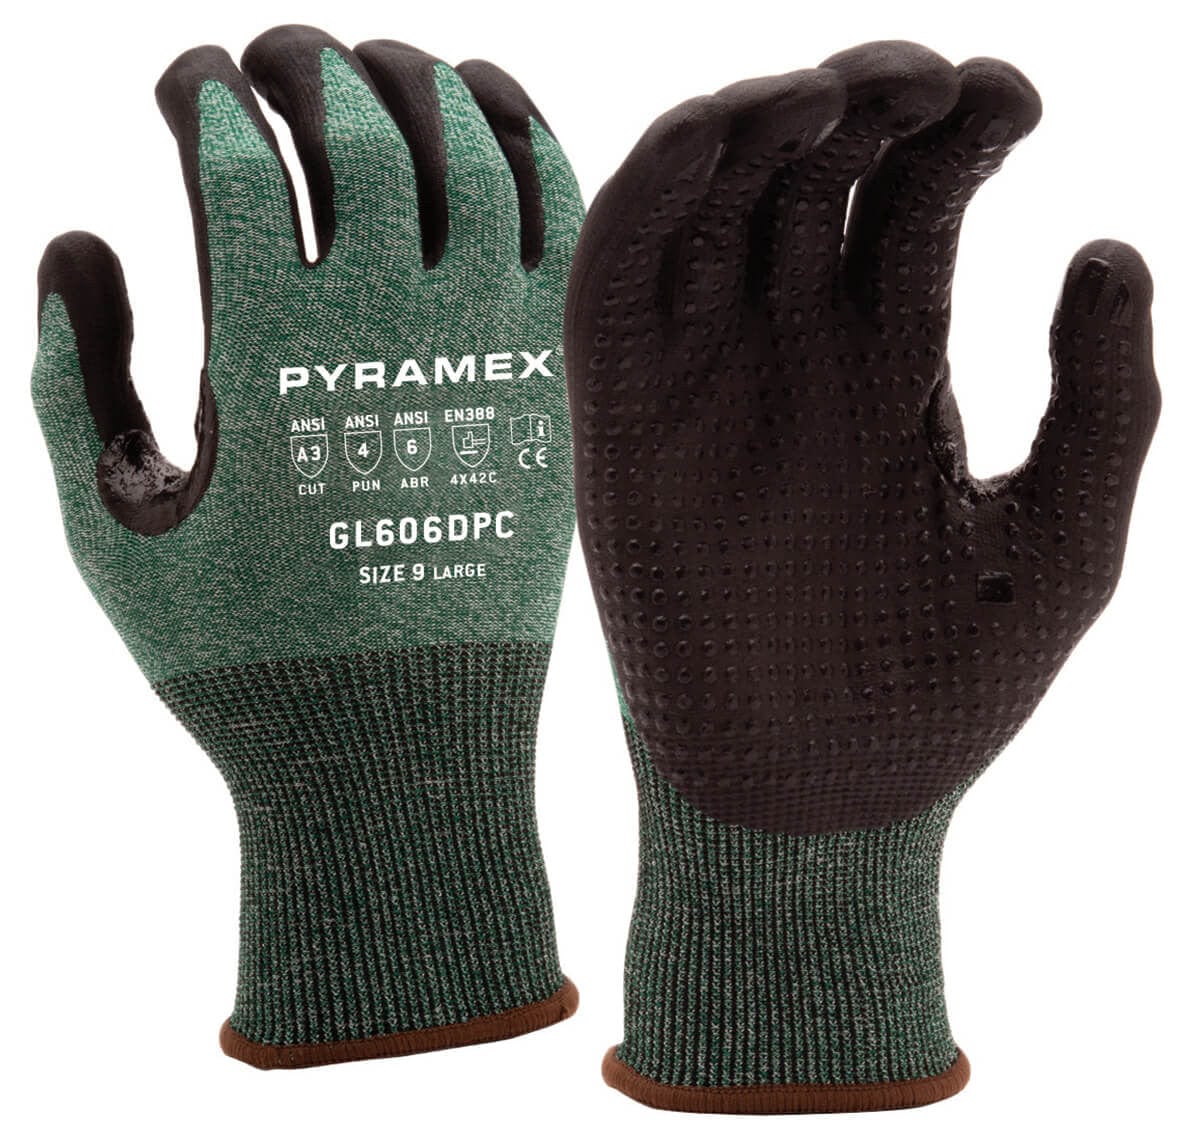 ANSI/ISEA 105-2016 Level A4 Impact & Cut Resistant Gloves, Hi-Vis, Nitrile  Coated